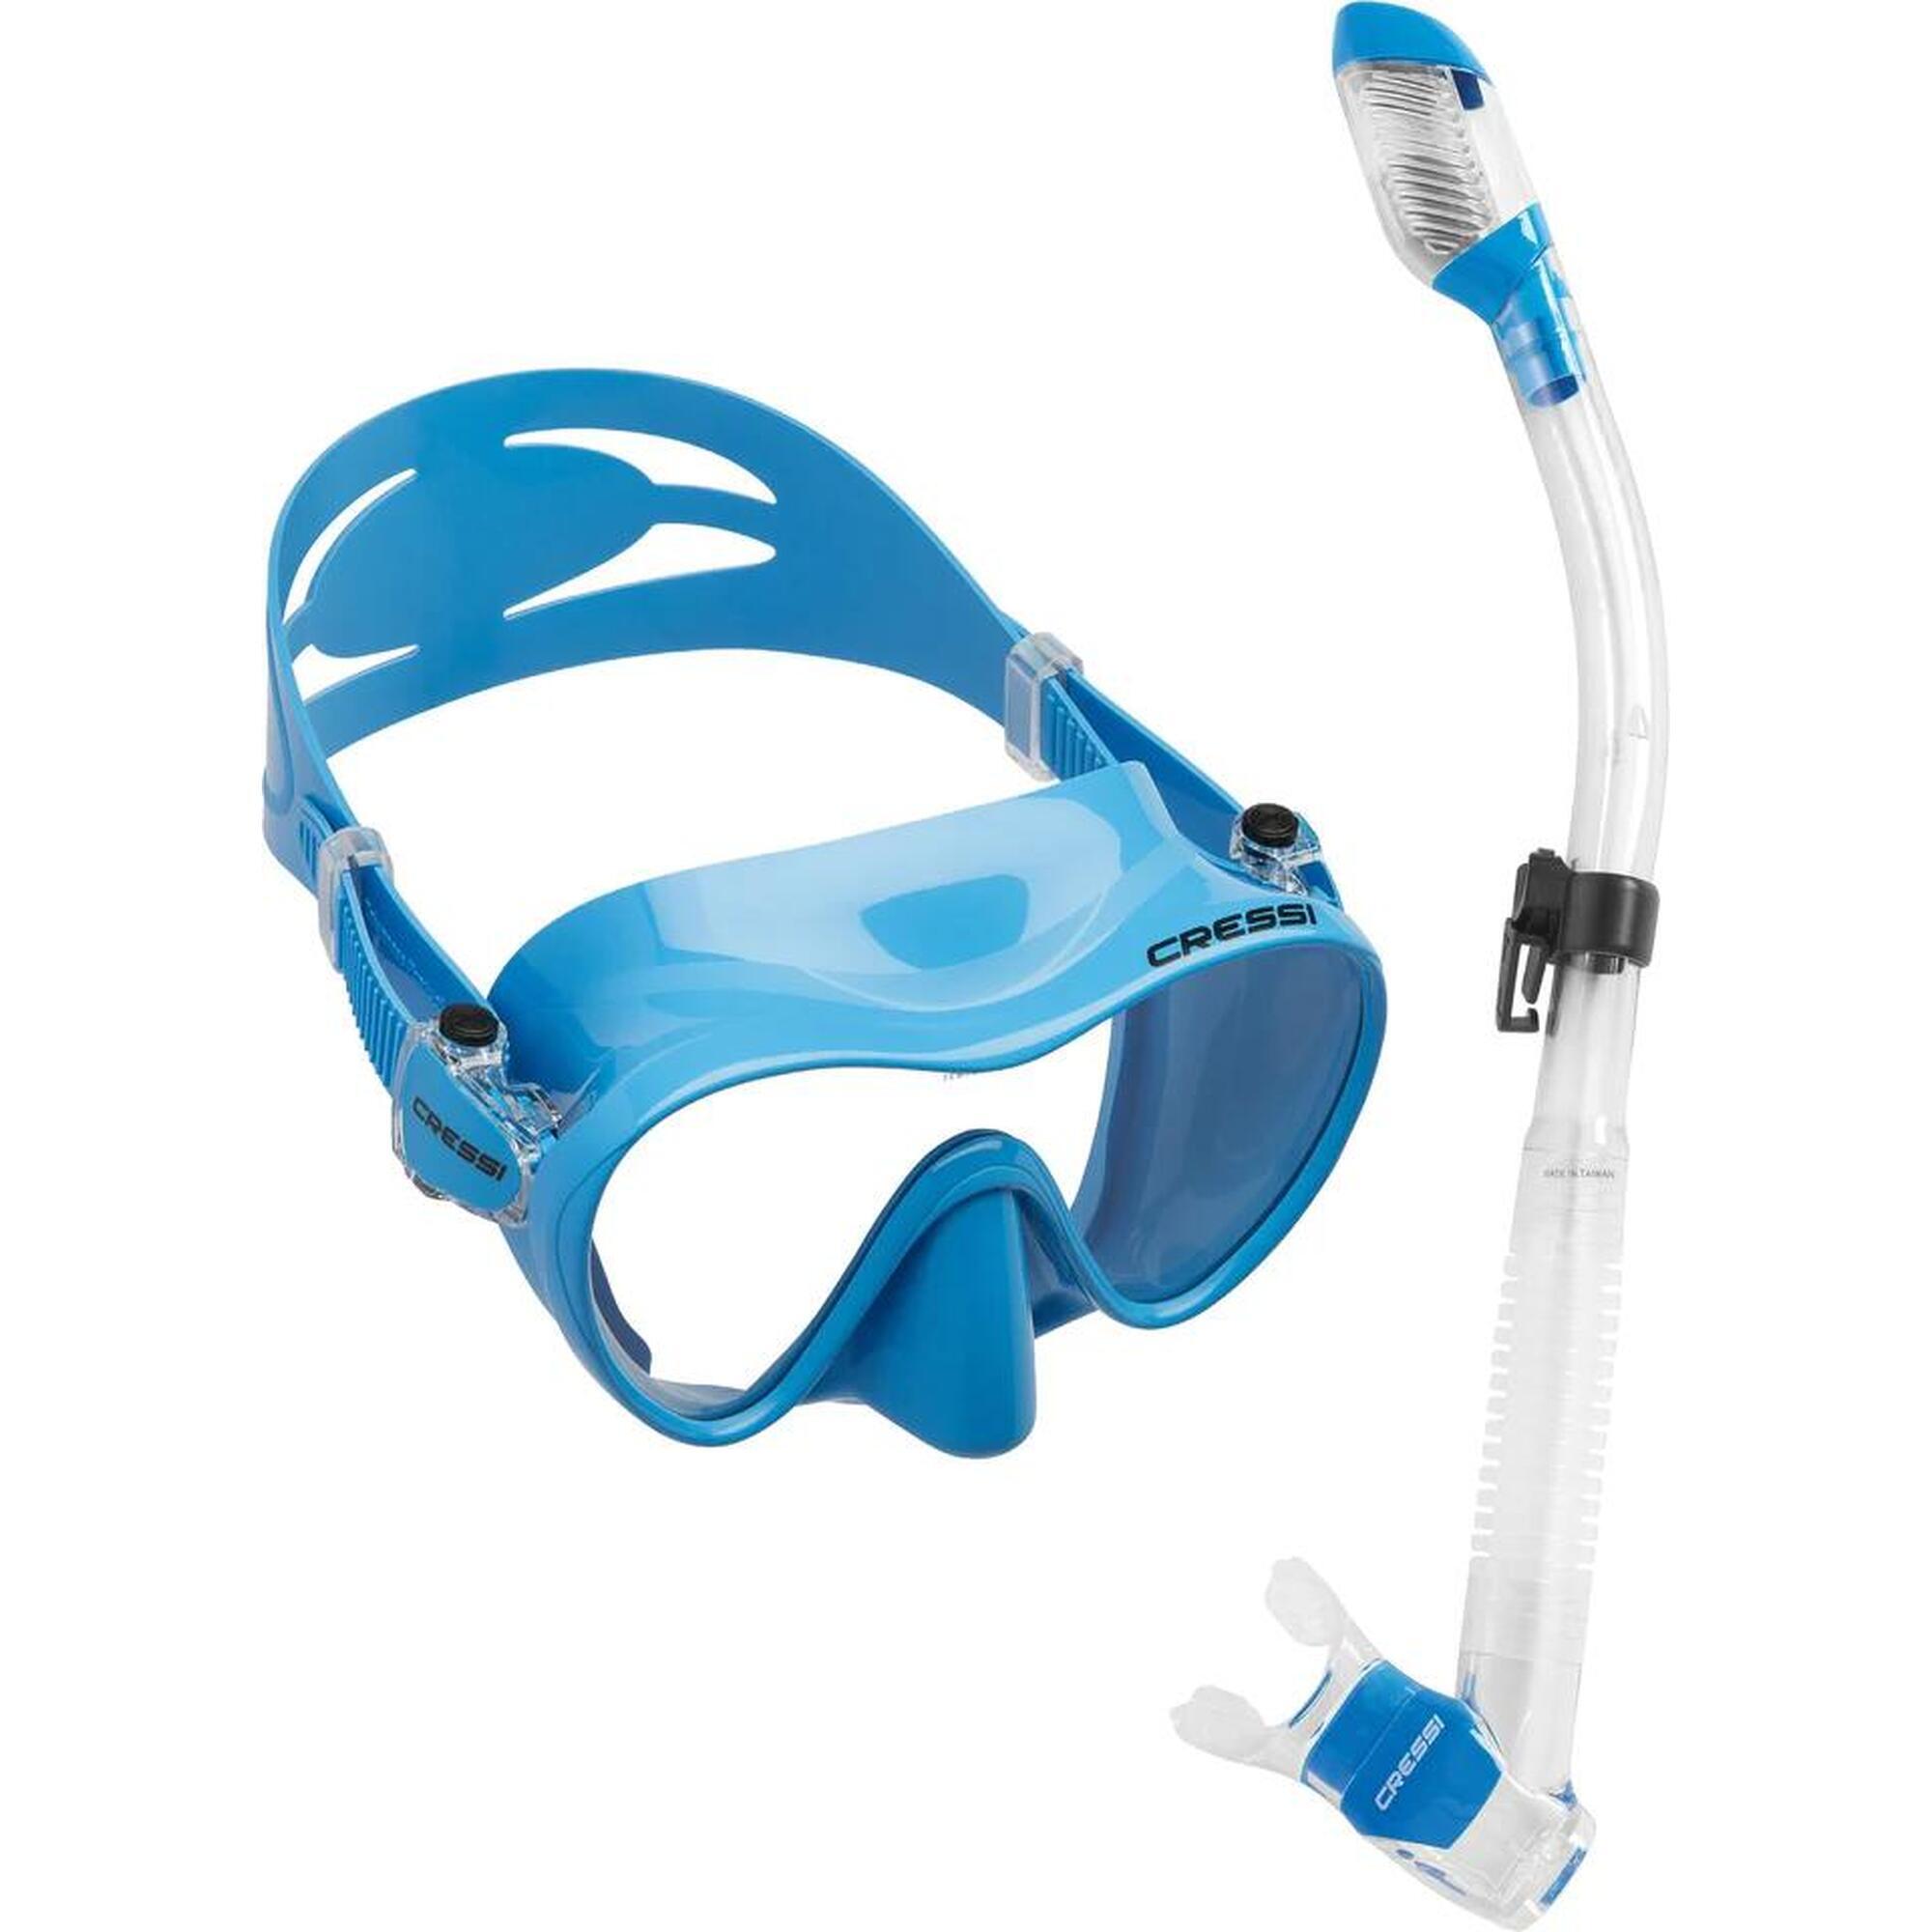 F1 Frameless mask + Dry Snorkel Combo - Blue